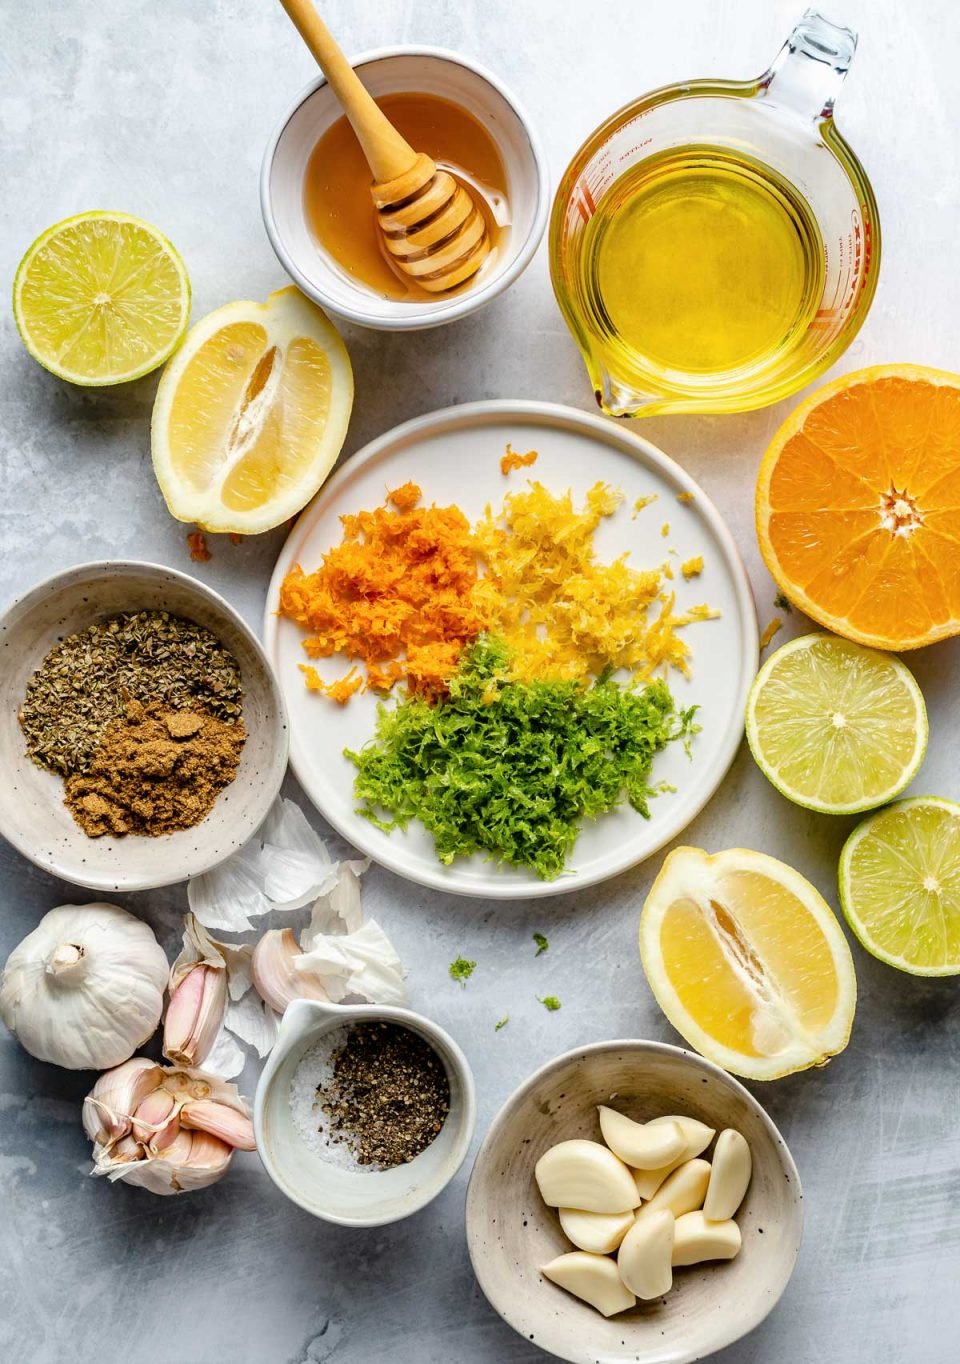 Mojo marinade ingredients arranged on a light blue surface: oranges, lemons, limes, zest of all 3, garlic, cumin, salt, pepper, honey, & olive oil.